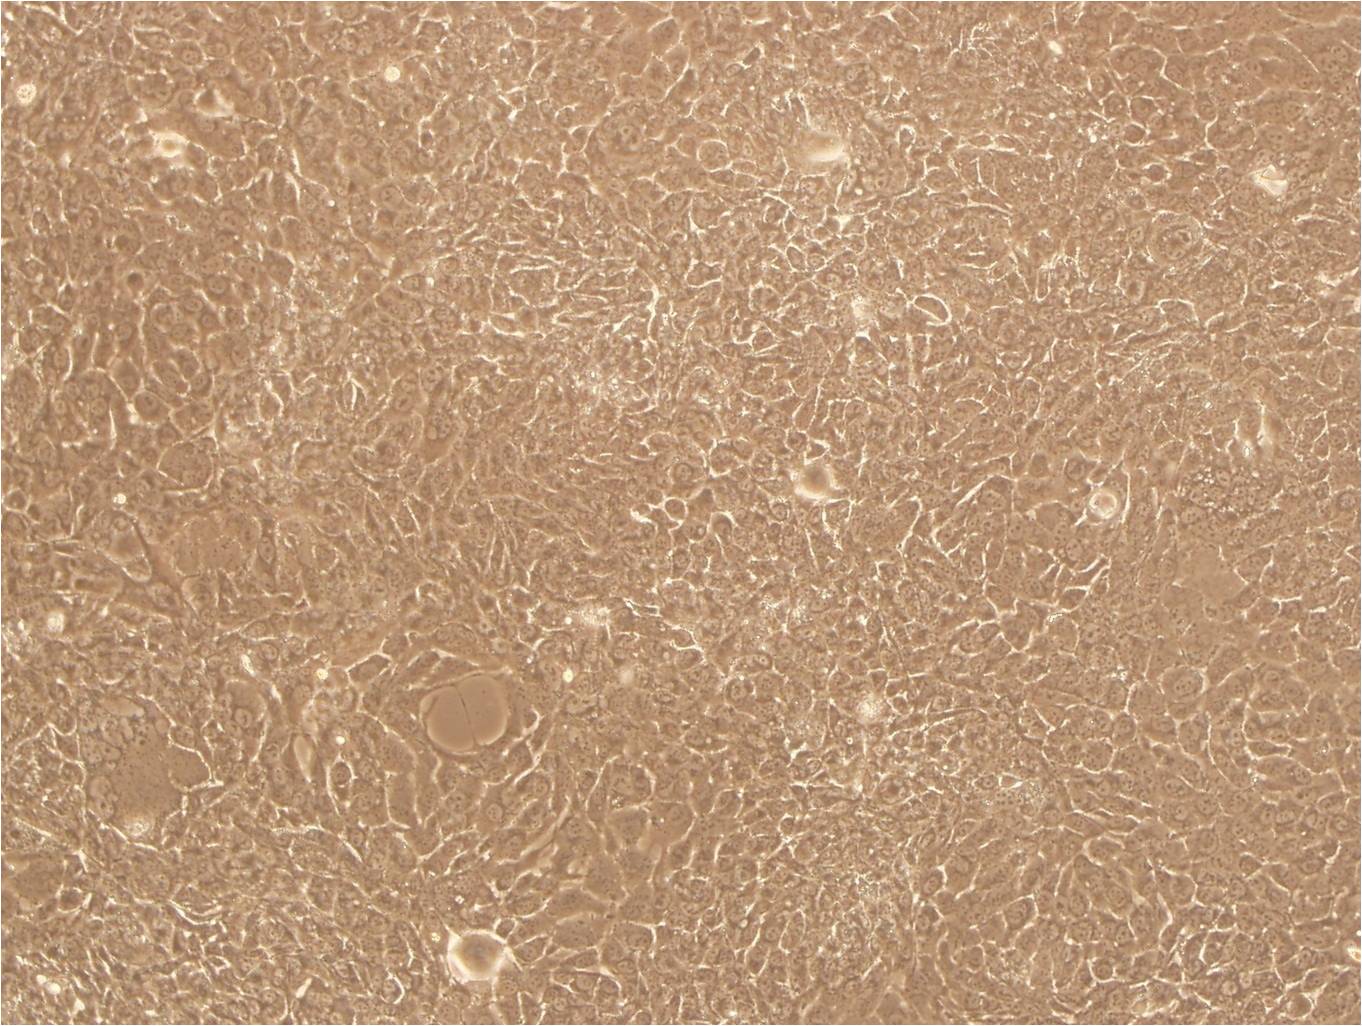 SNU-475:人肝癌复苏细胞(提供STR鉴定图谱),SNU-475